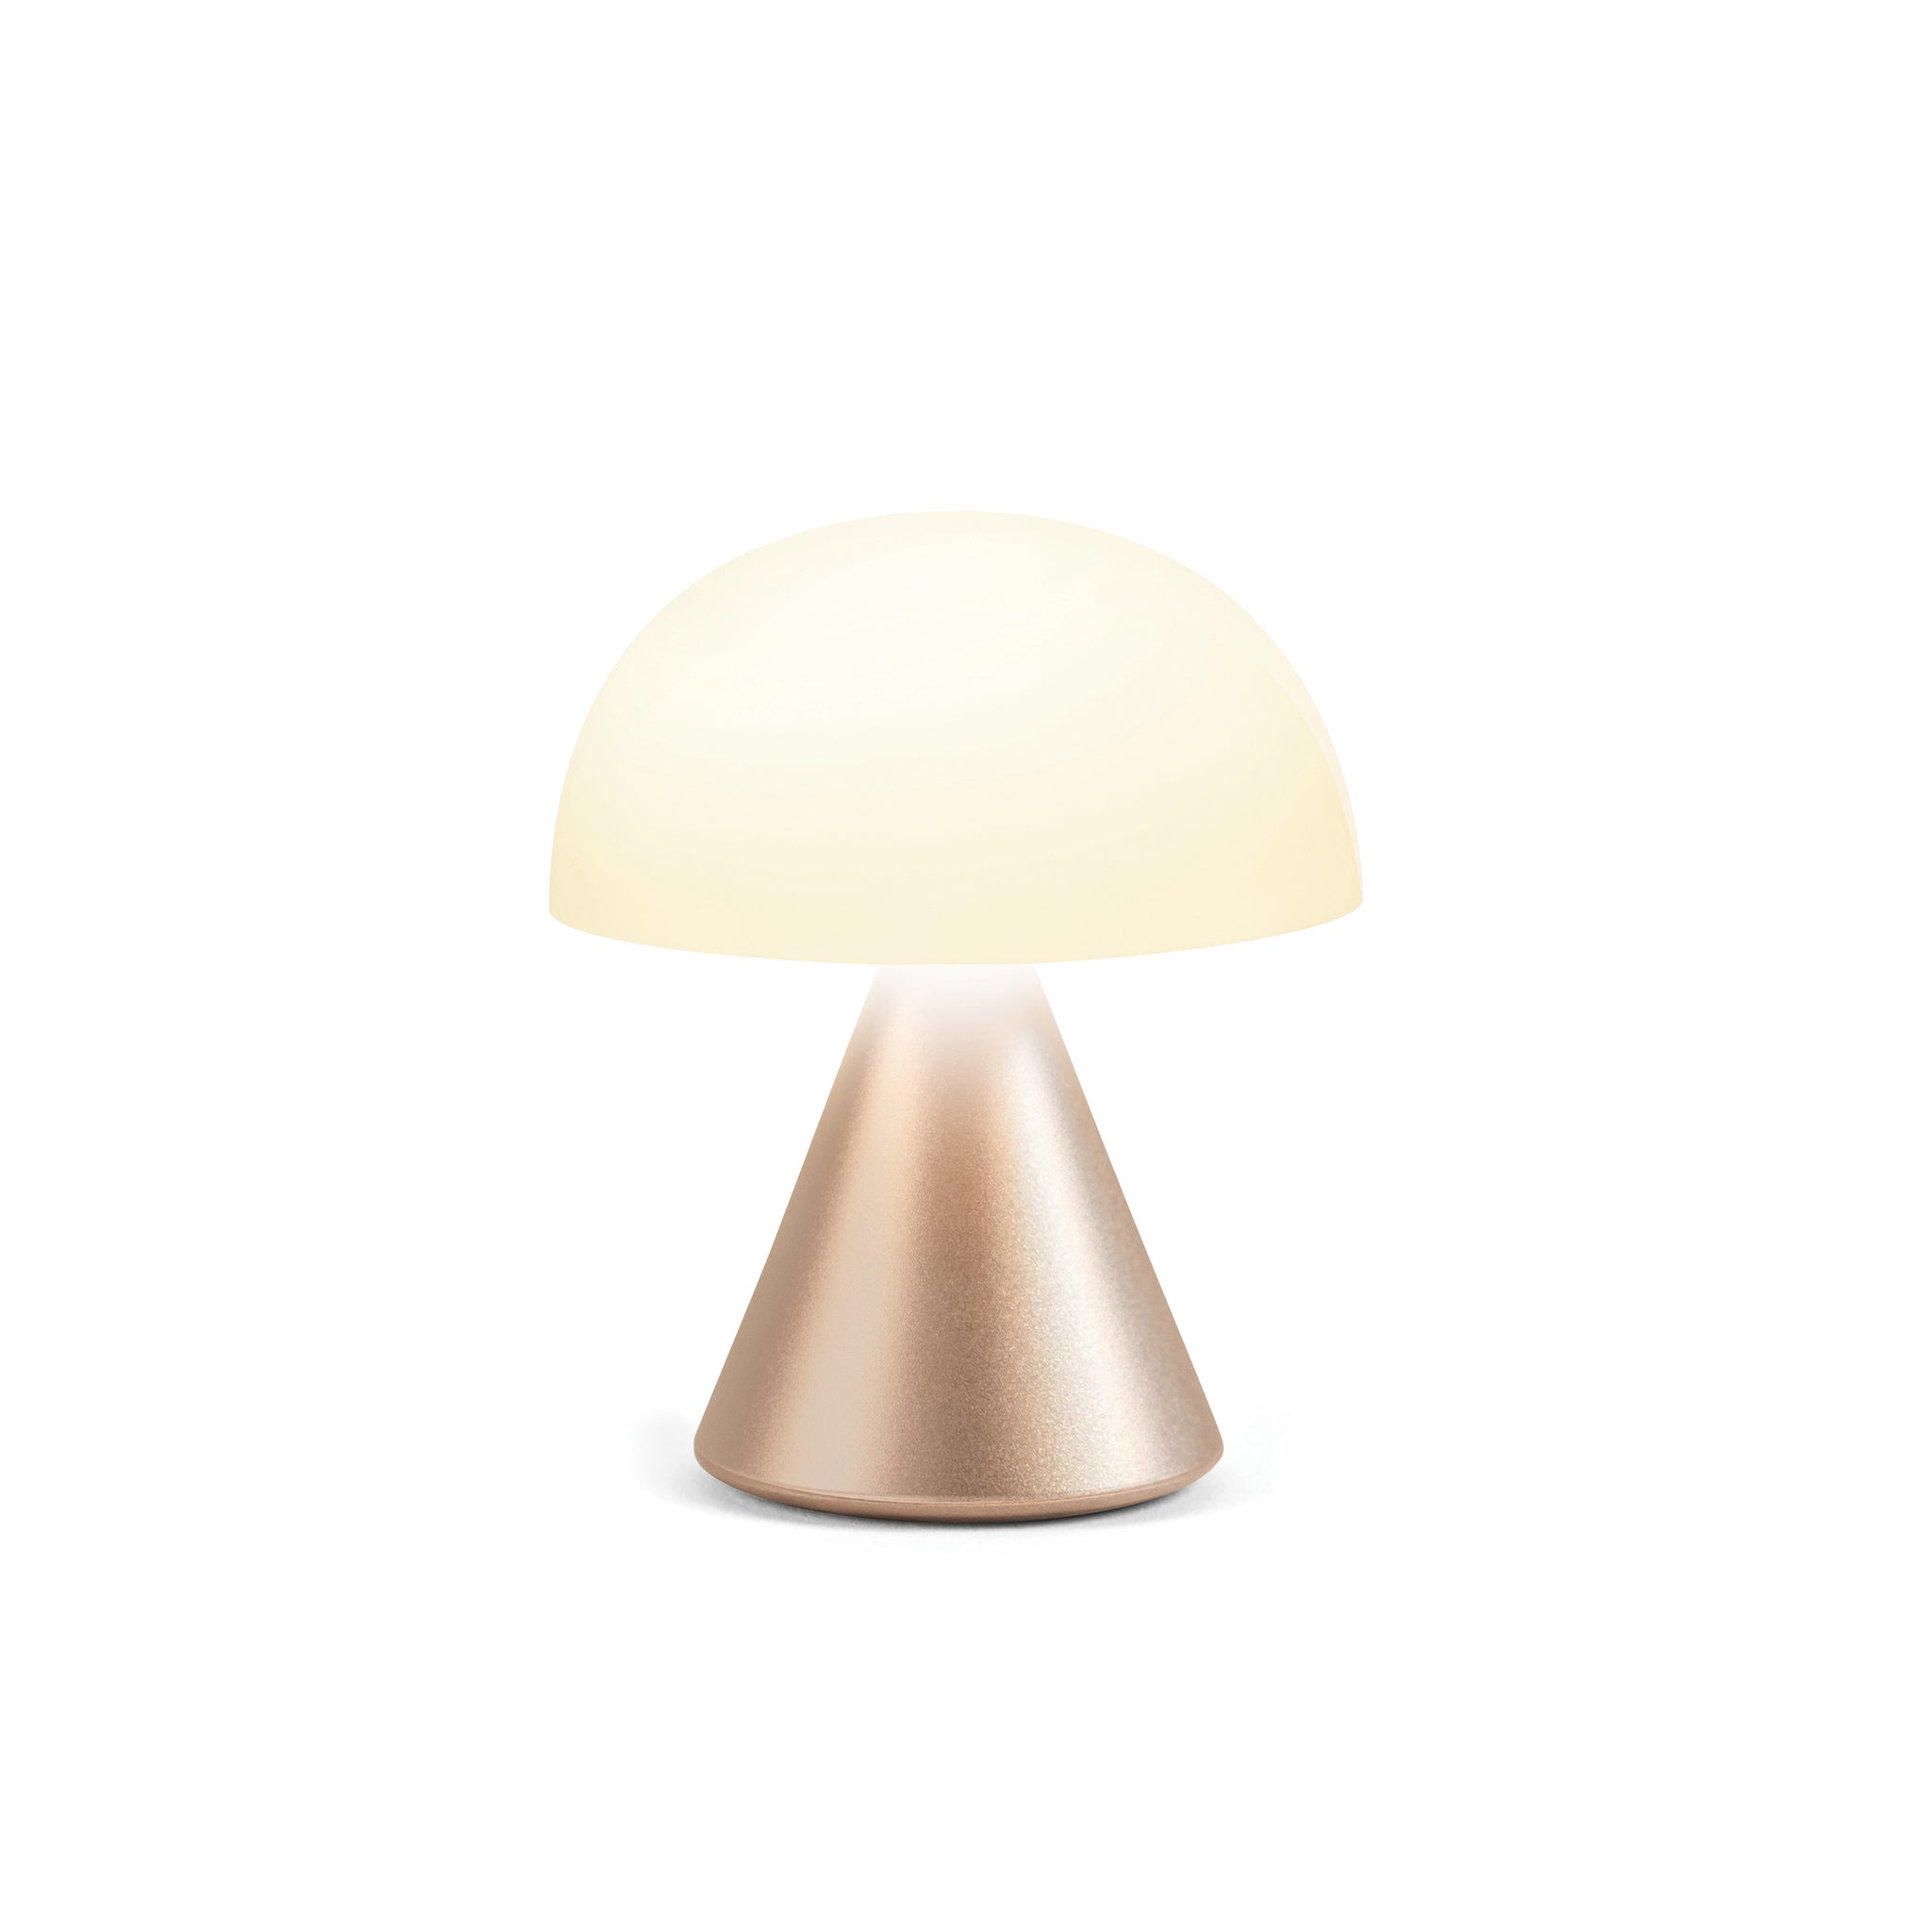 Lexon Mina Small Soft Gold│Oplaadbare LED lamp│art. LH60MD│vooraanzicht met warm licht aan